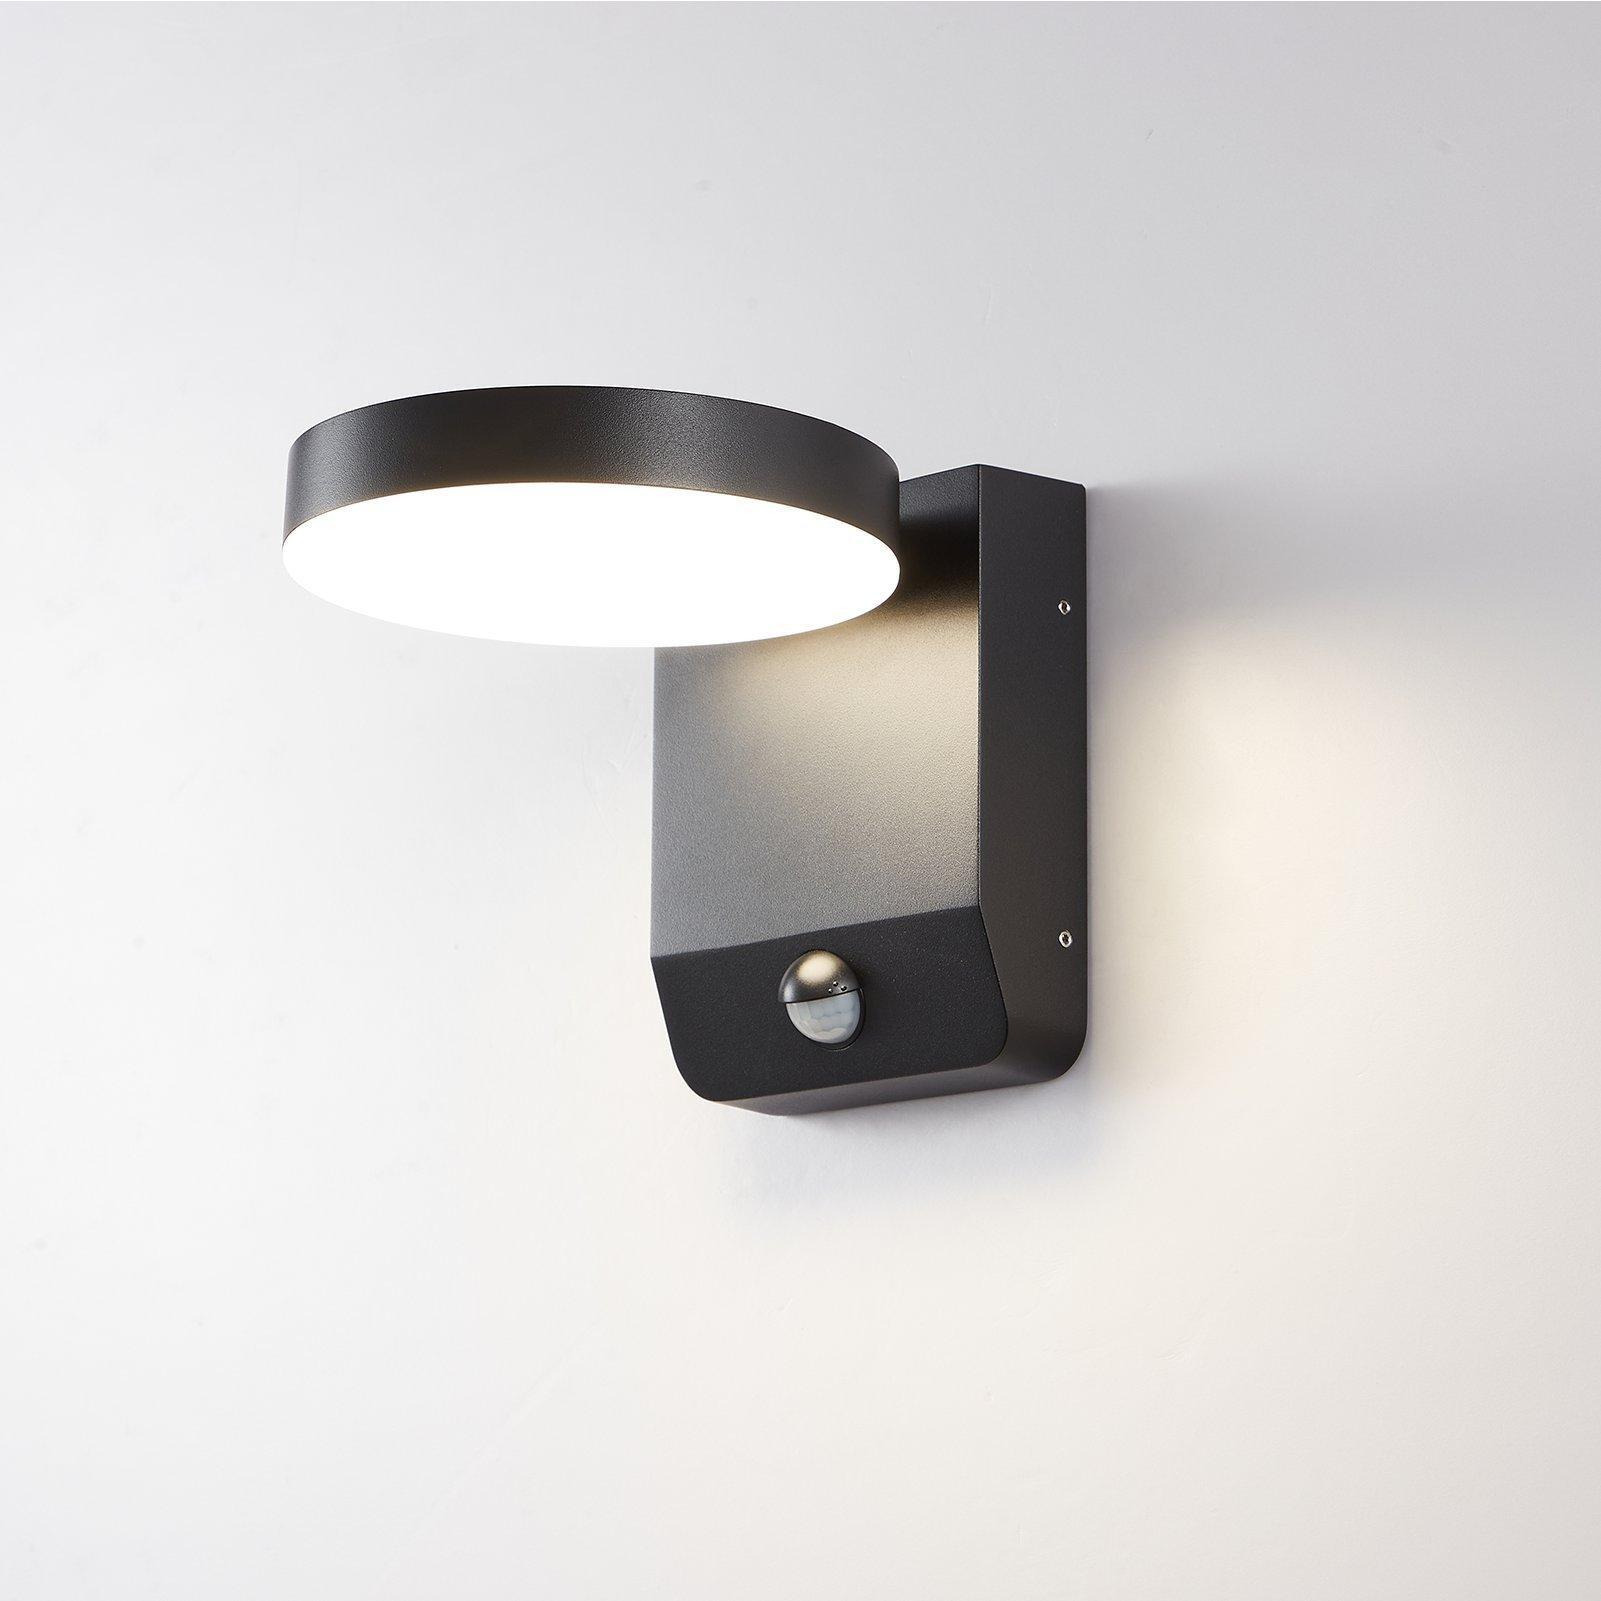 Matt Black Modern Round LED Outdoor Wall Light Mains Powered, Weatherproof, with PIR Sensor - image 1